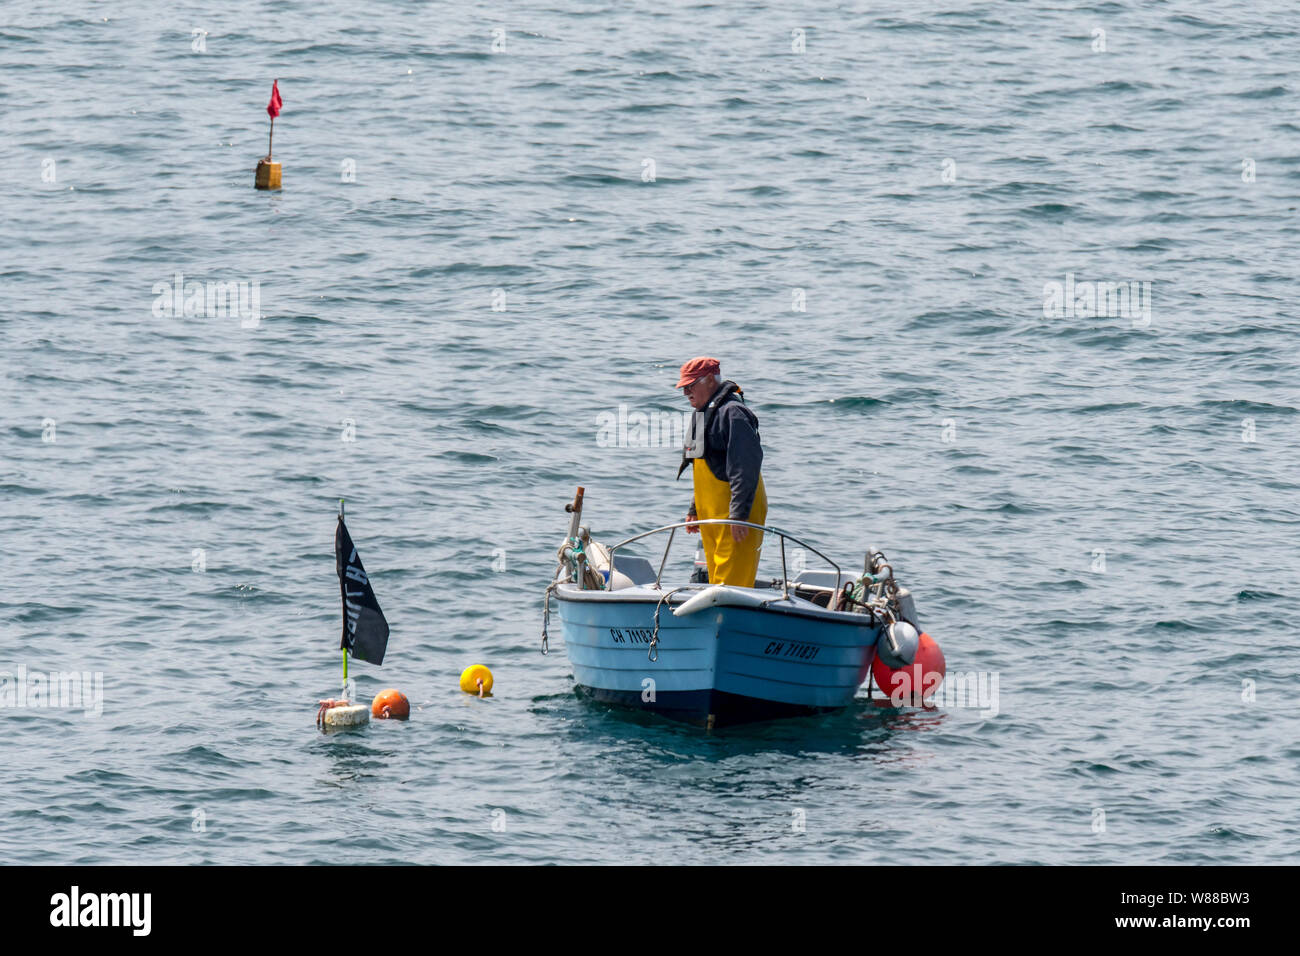 Fischer in kleines Fischerboot Drop/schießen Hummerfallen/Hummer pots/hummer Reusen im Atlantischen Ozean/Englischen Kanal Stockfoto